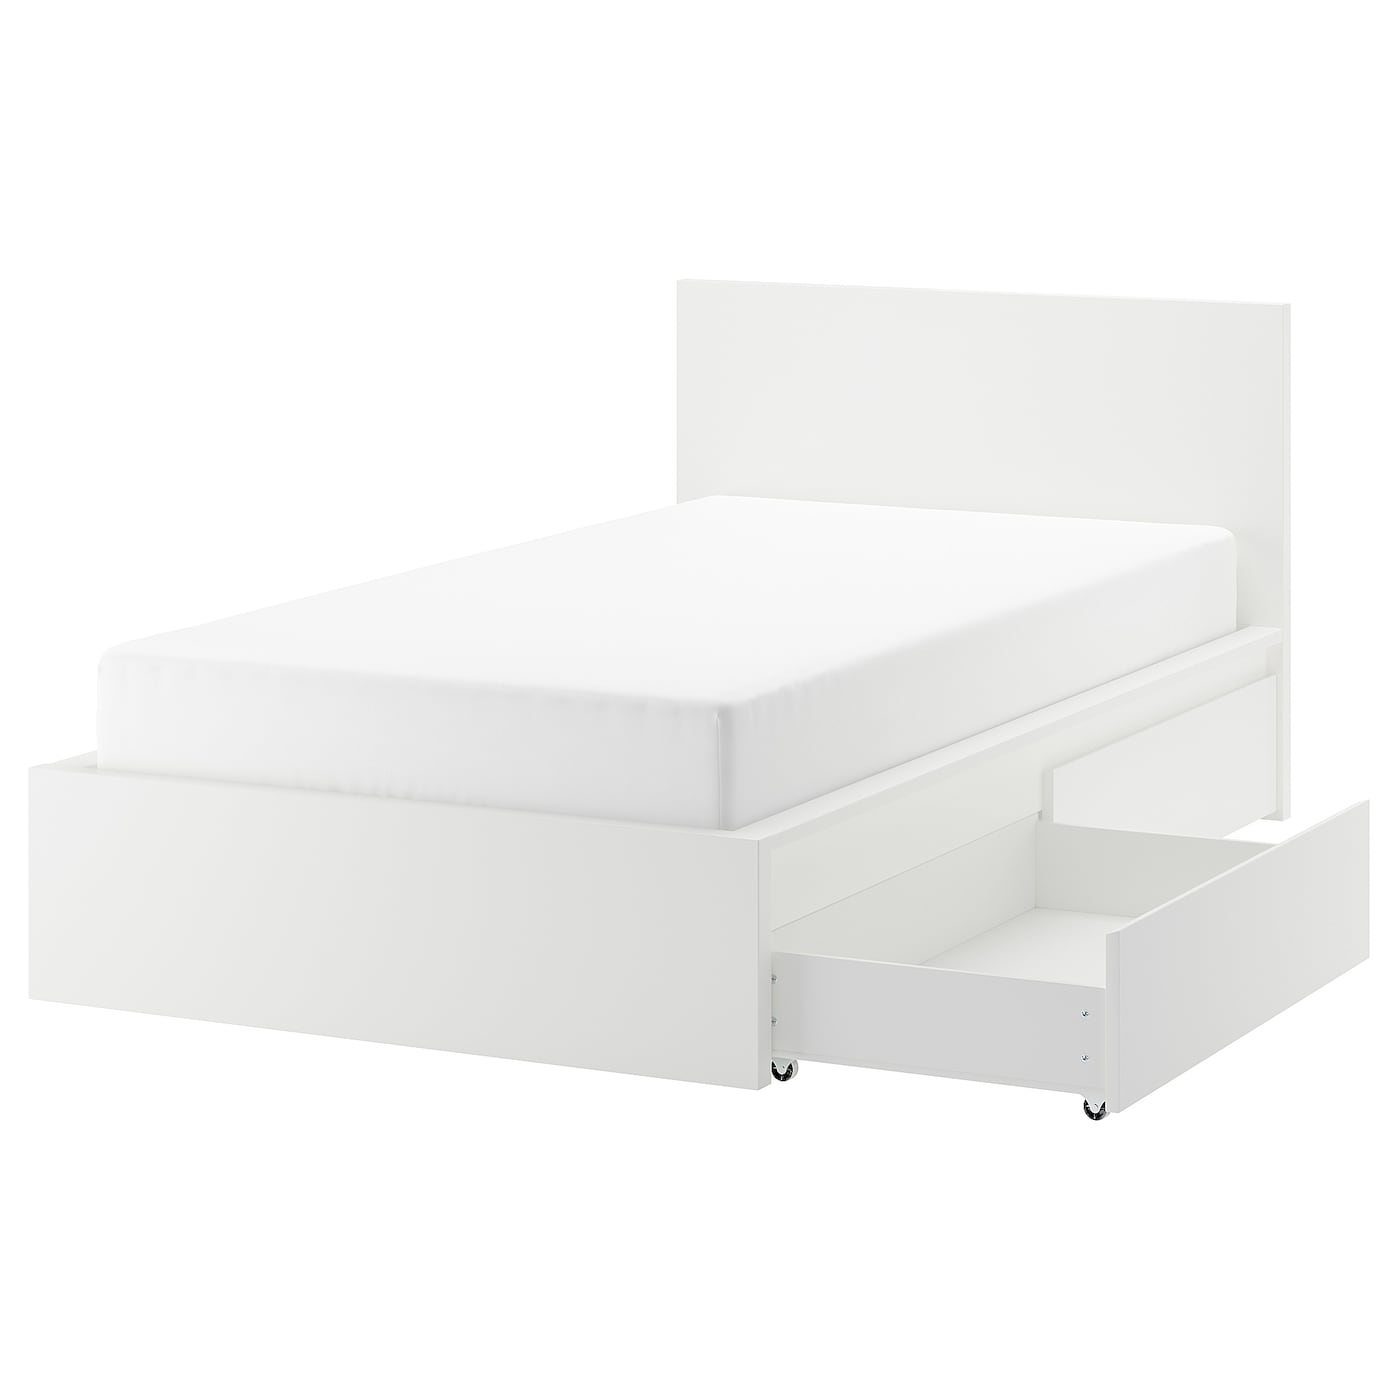 Каркас кровати с 2 ящиками для хранения - IKEA MALM/LURÖY/LUROY, 200х120 см, белый, МАЛЬМ/ЛУРОЙ ИКЕА